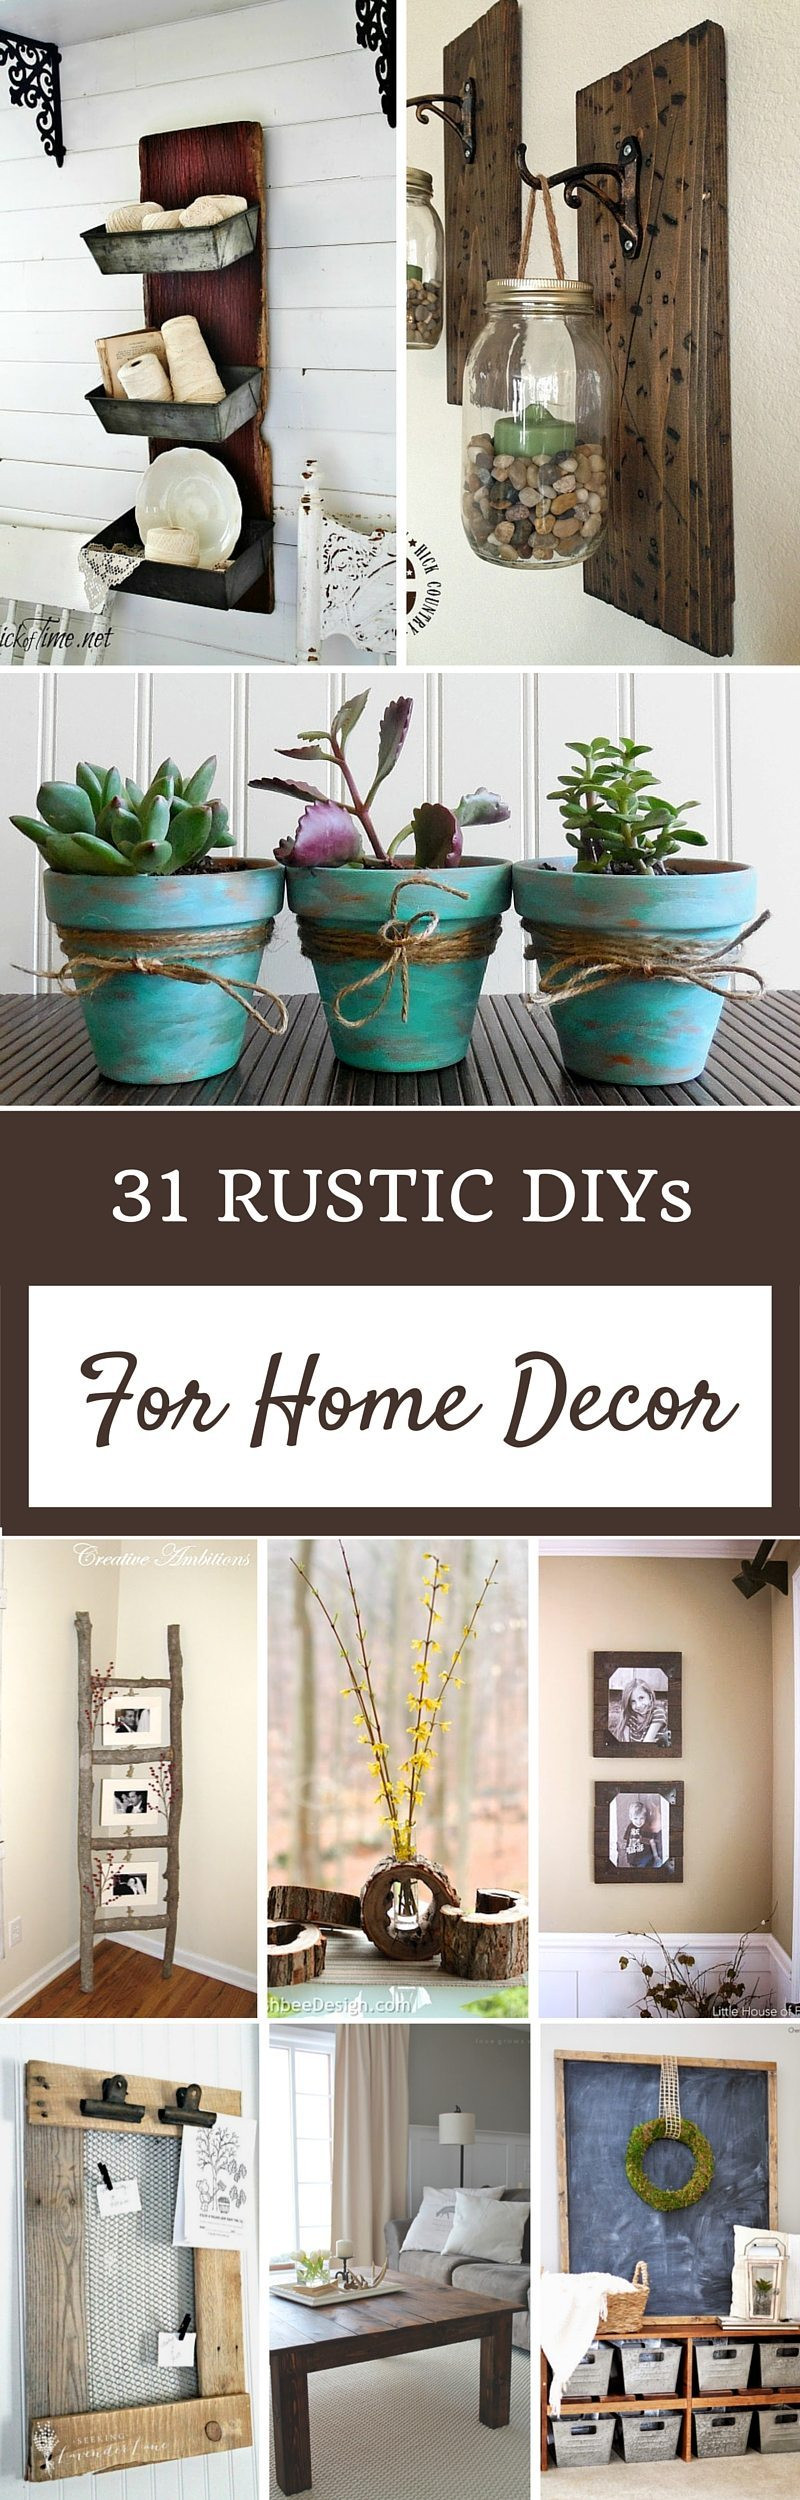 Pinterest DIY Crafts Home Decor
 Rustic Home Decor Ideas